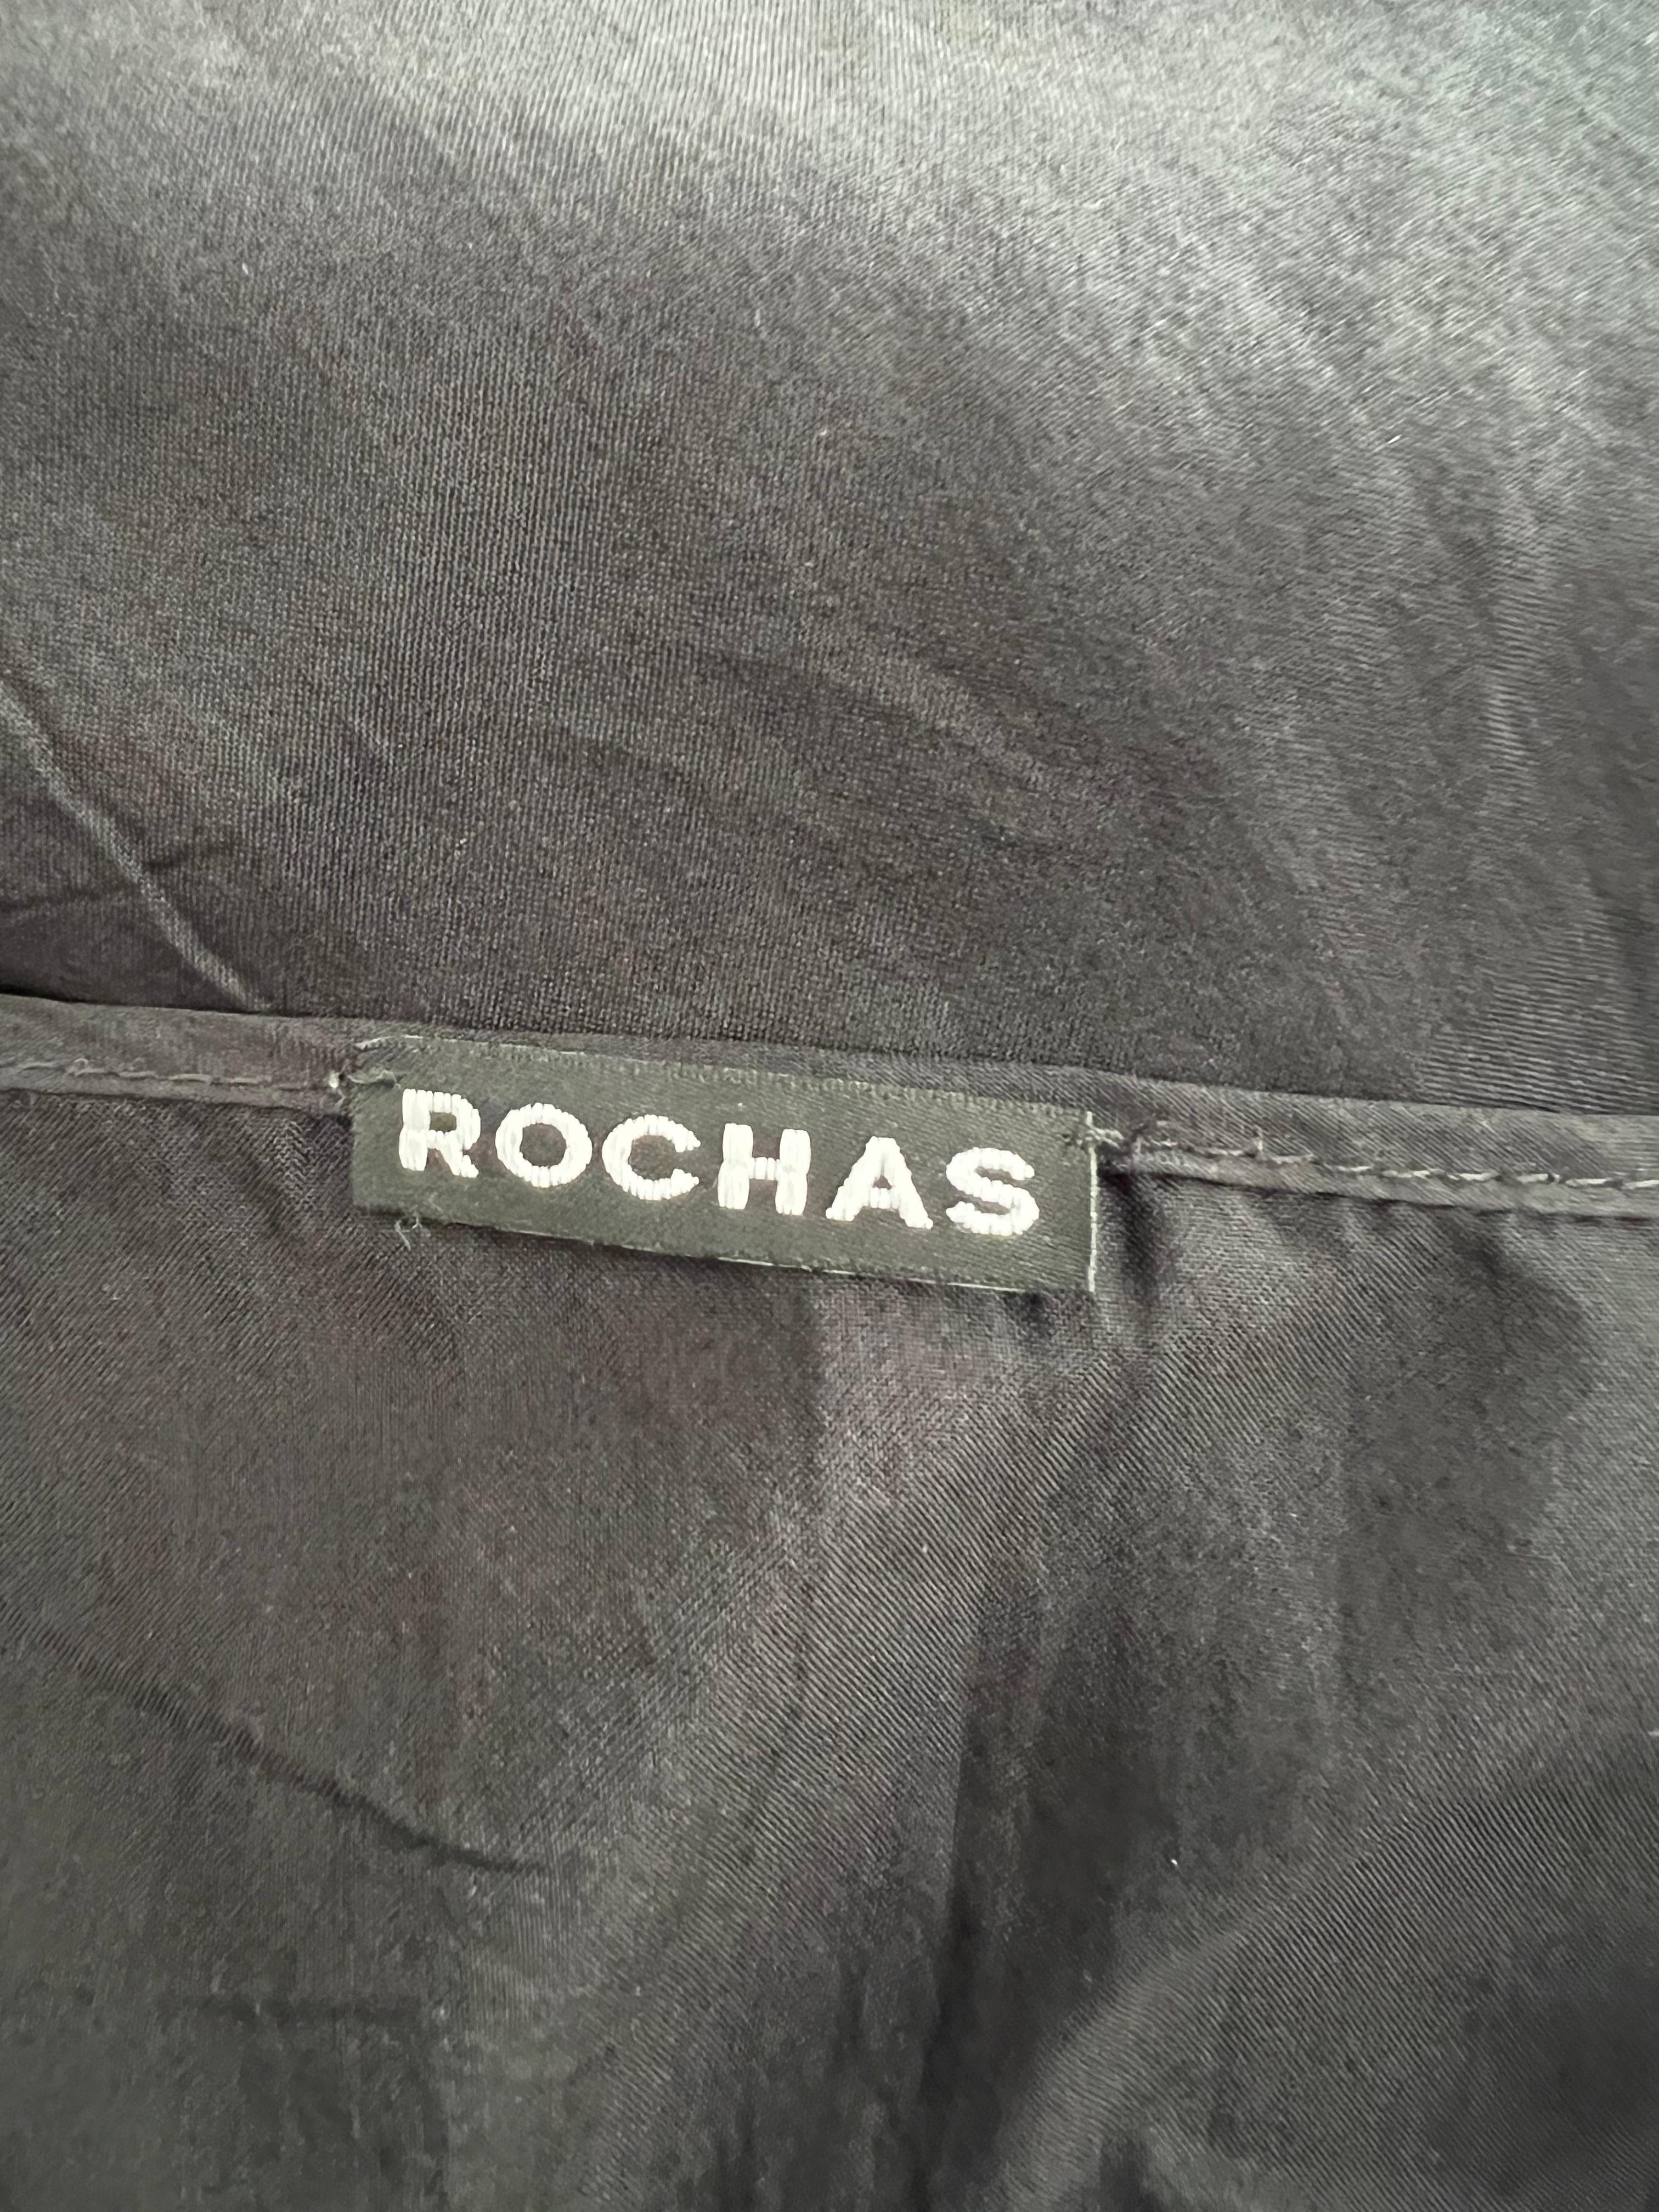 Rochas Paris Silk Midi Dress, Size 40 For Sale 4